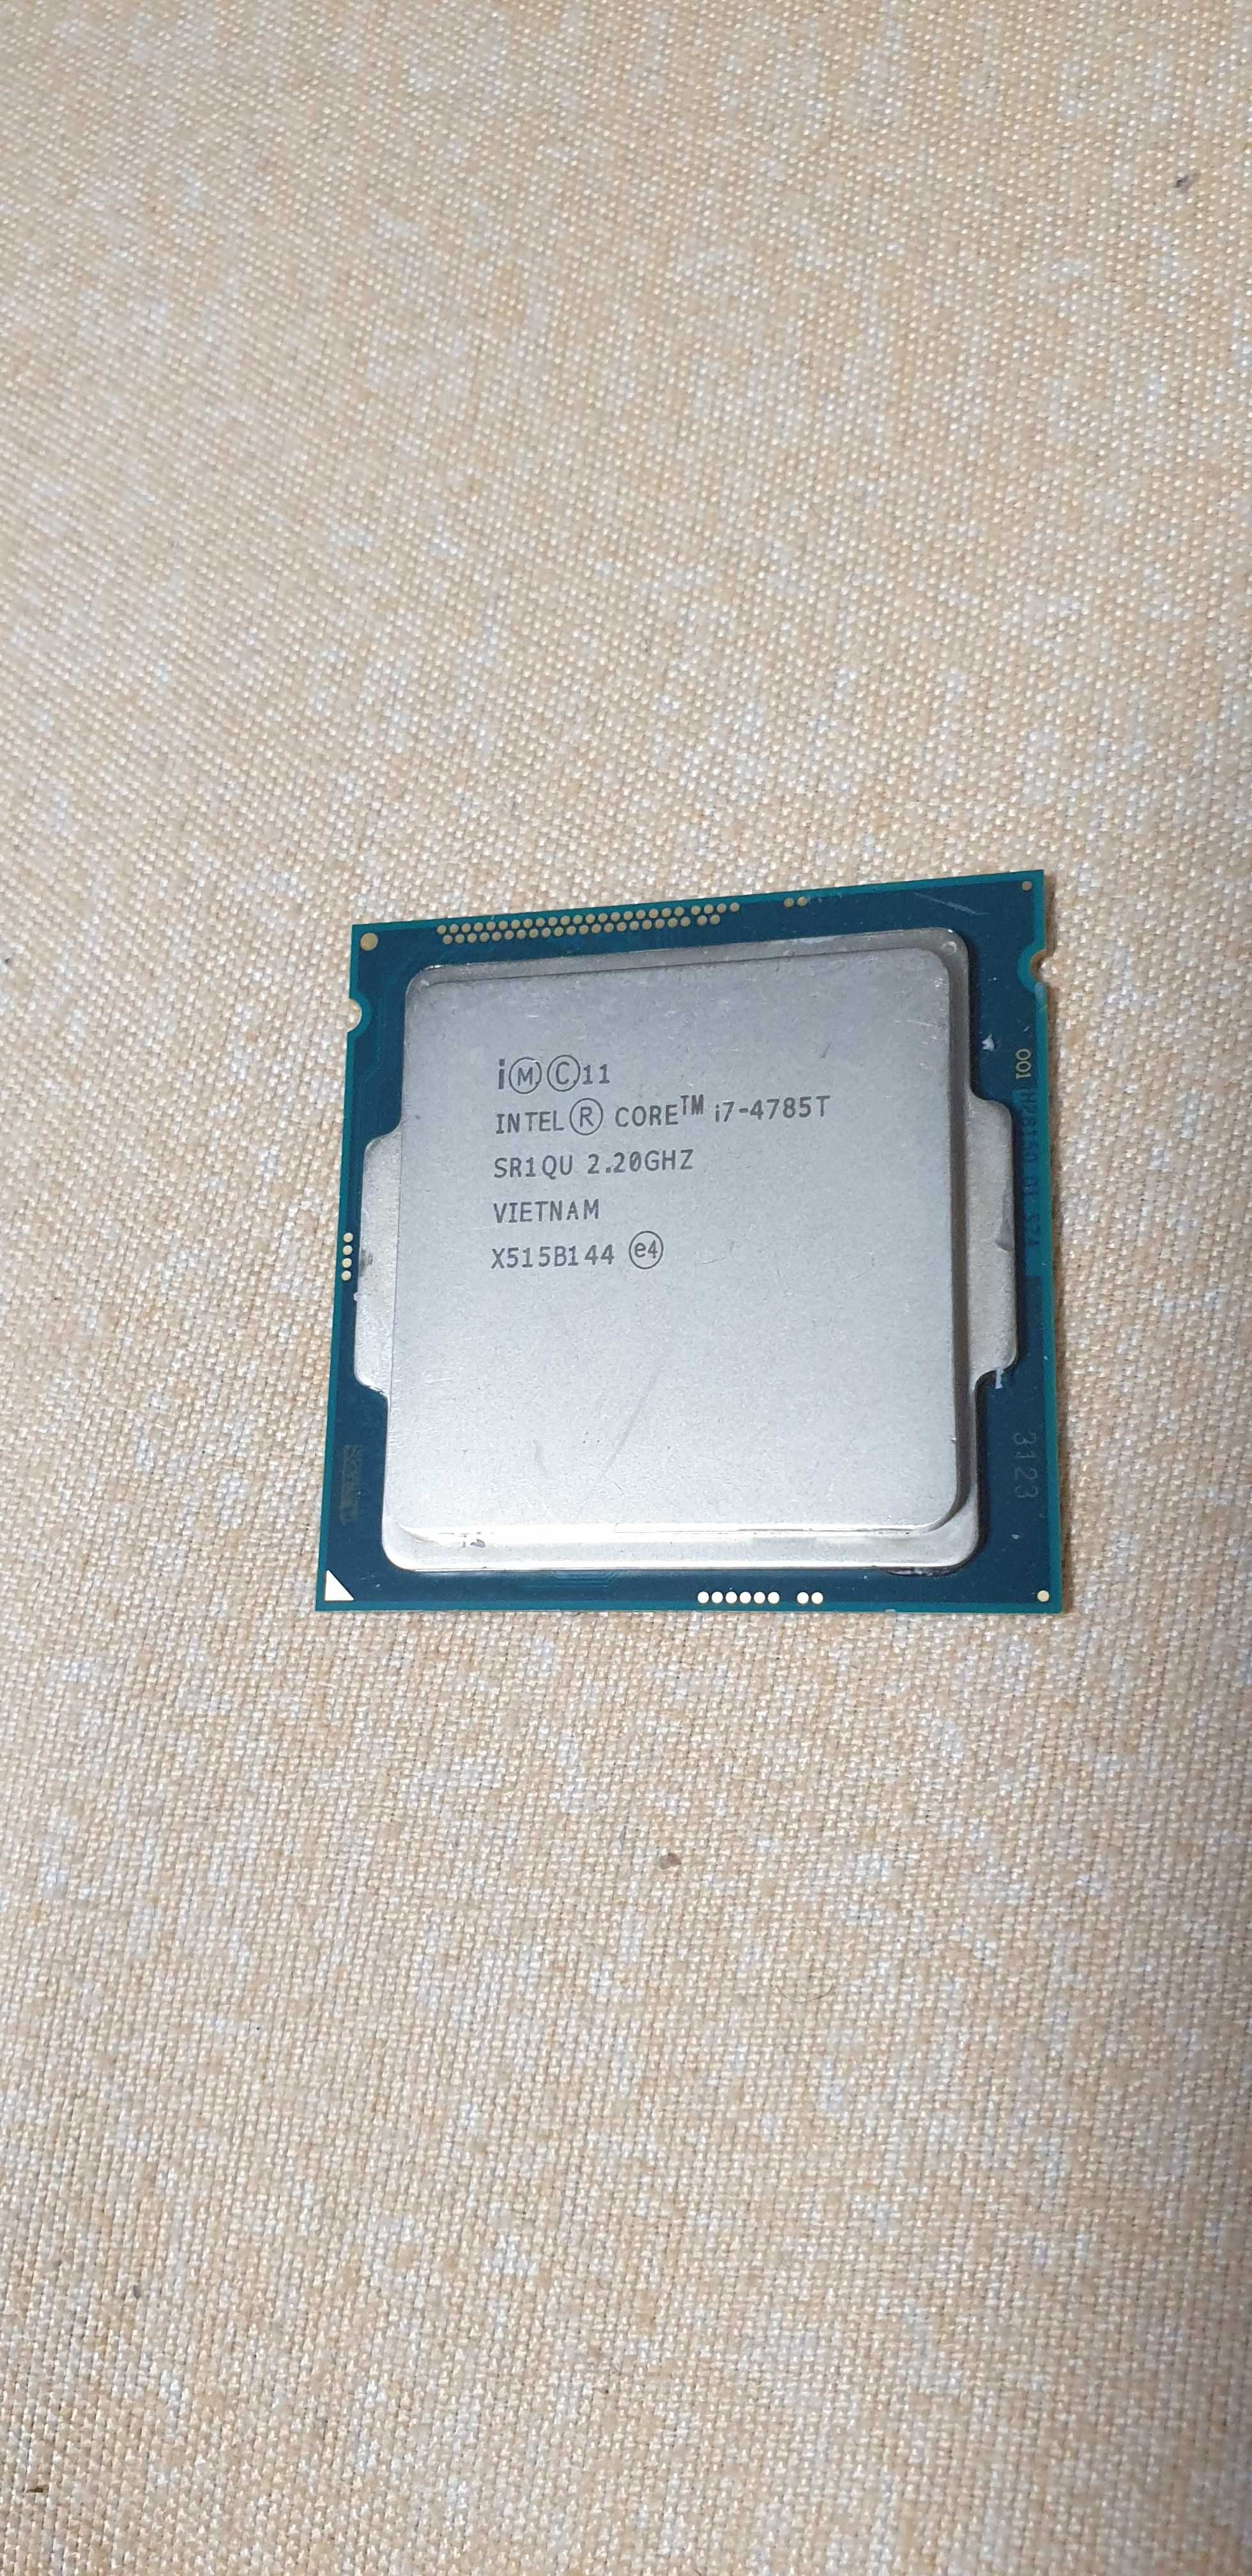 Procesor Intel Haswell Core i7 4785T 2.2ghz 35w soket 1150